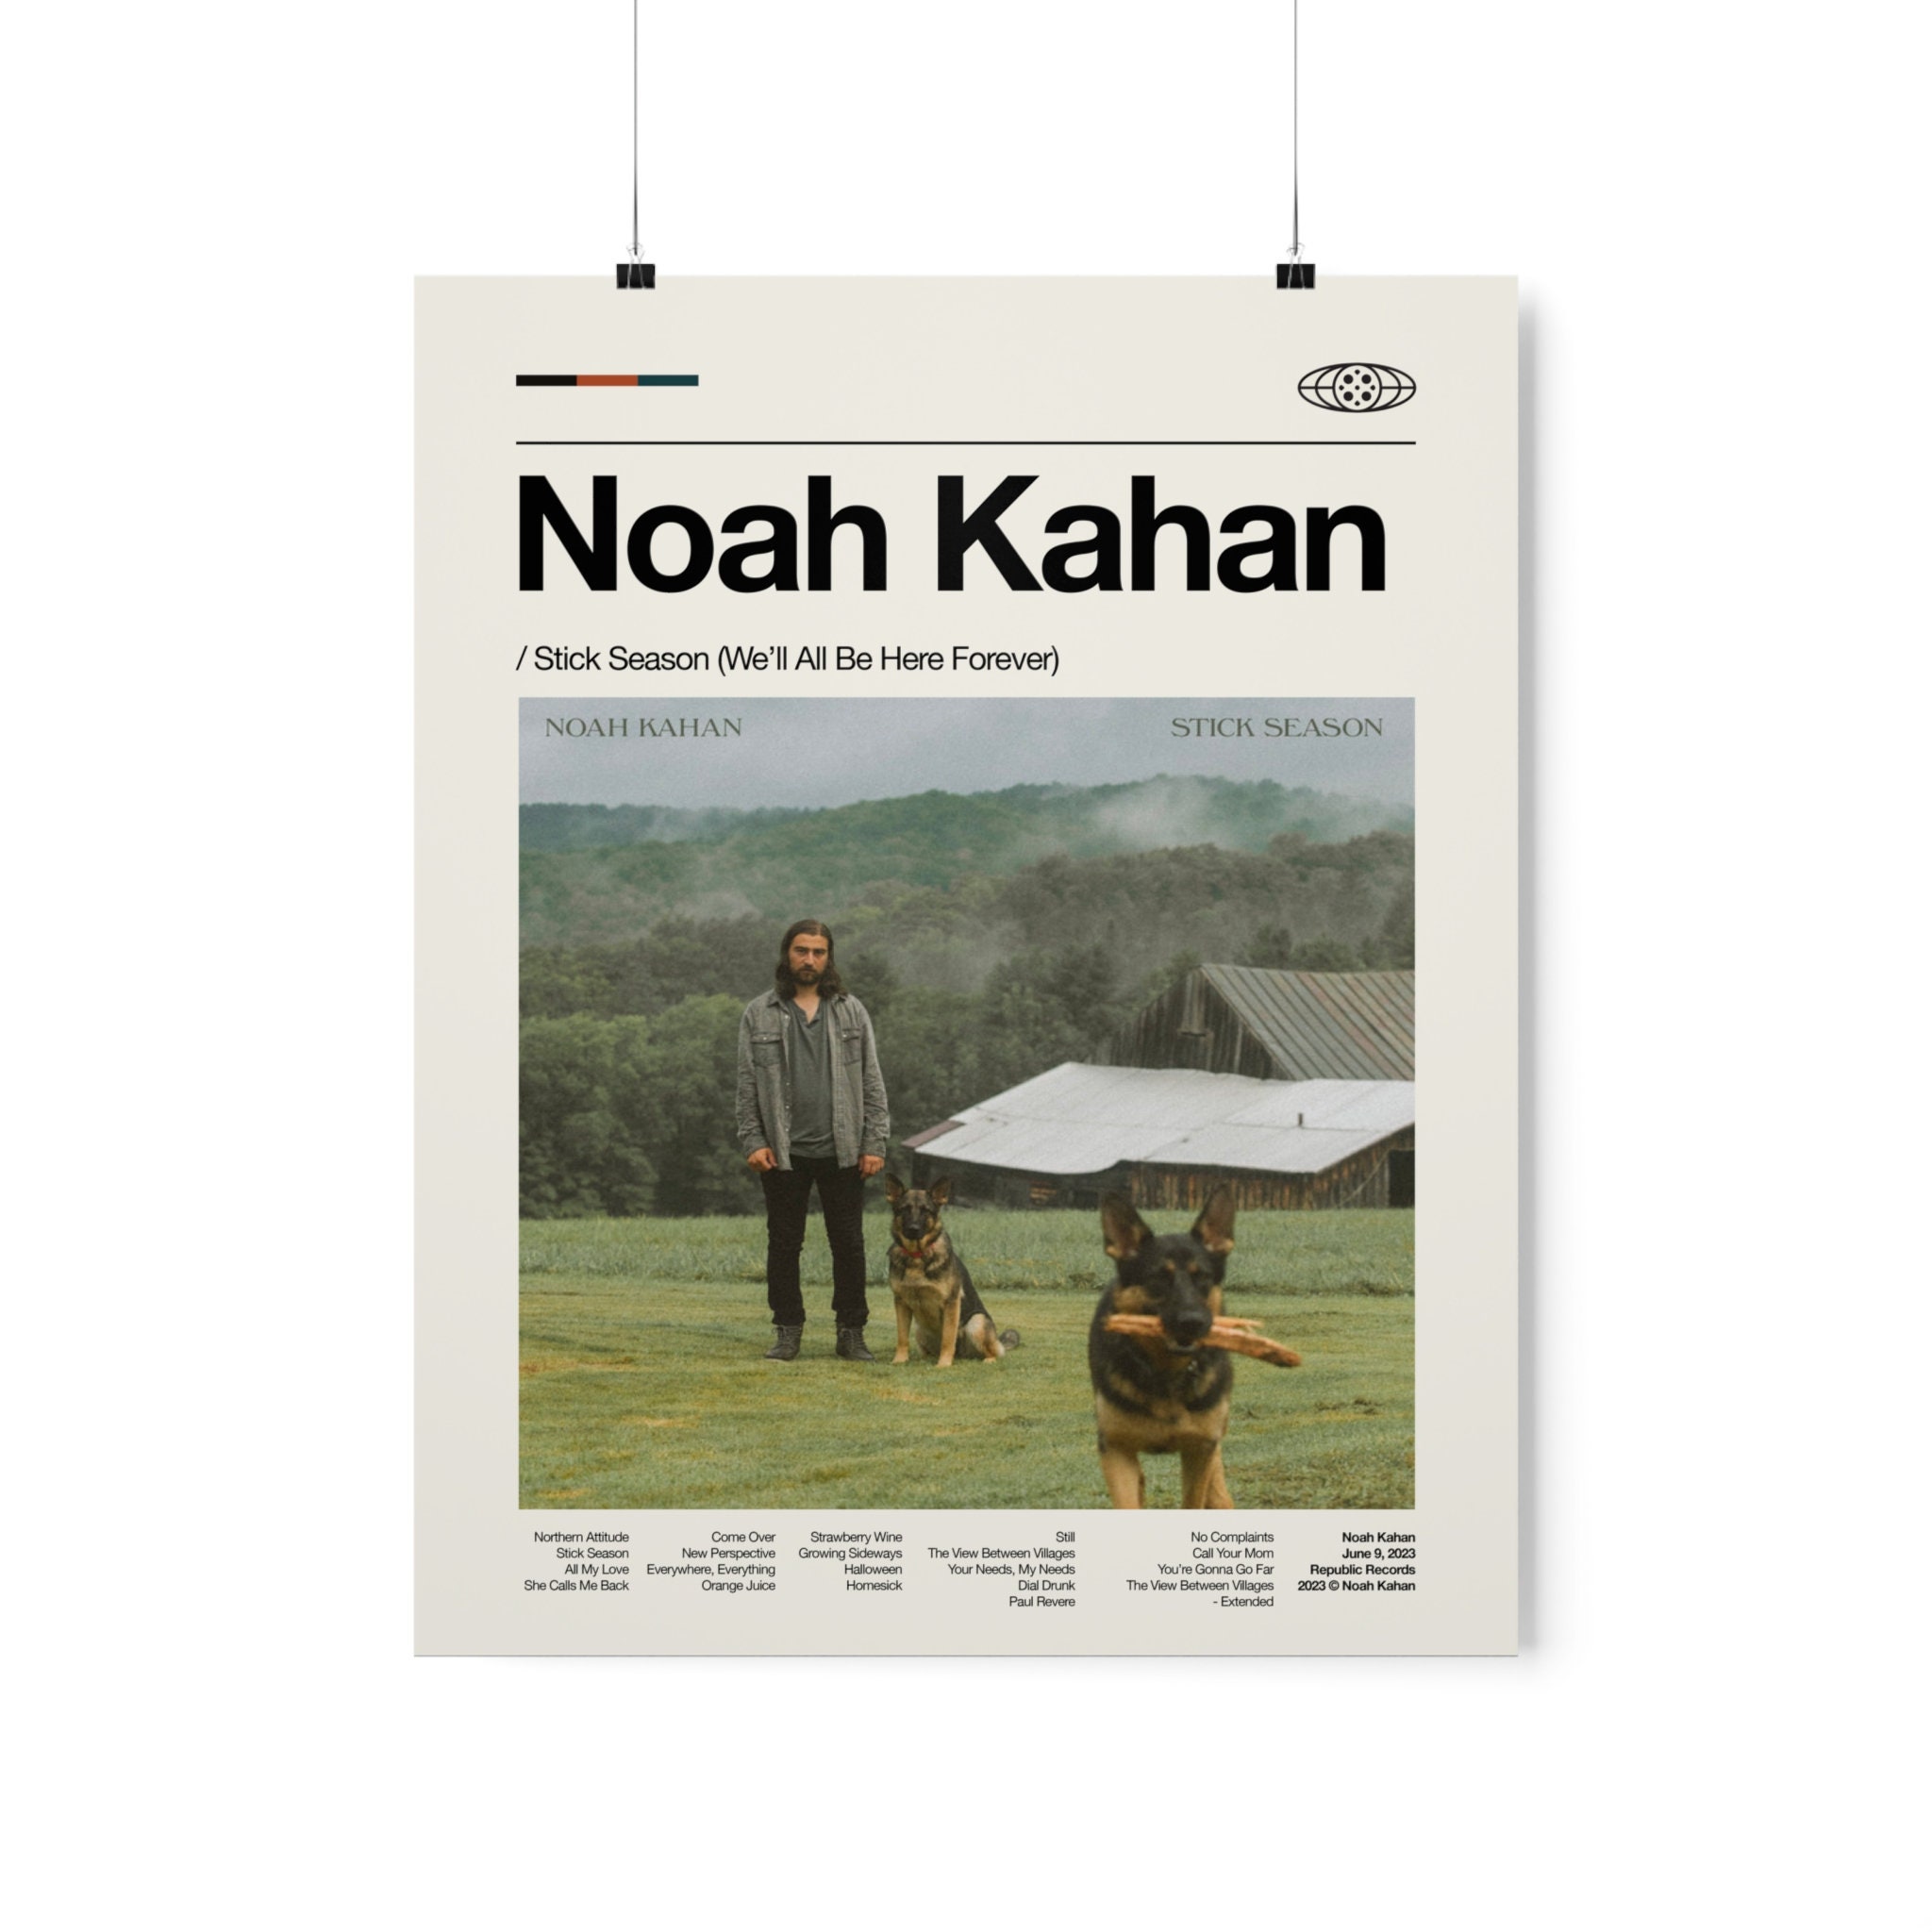 Everywhere, everything - Noah Kahan, Gracie Abrams (Original Key